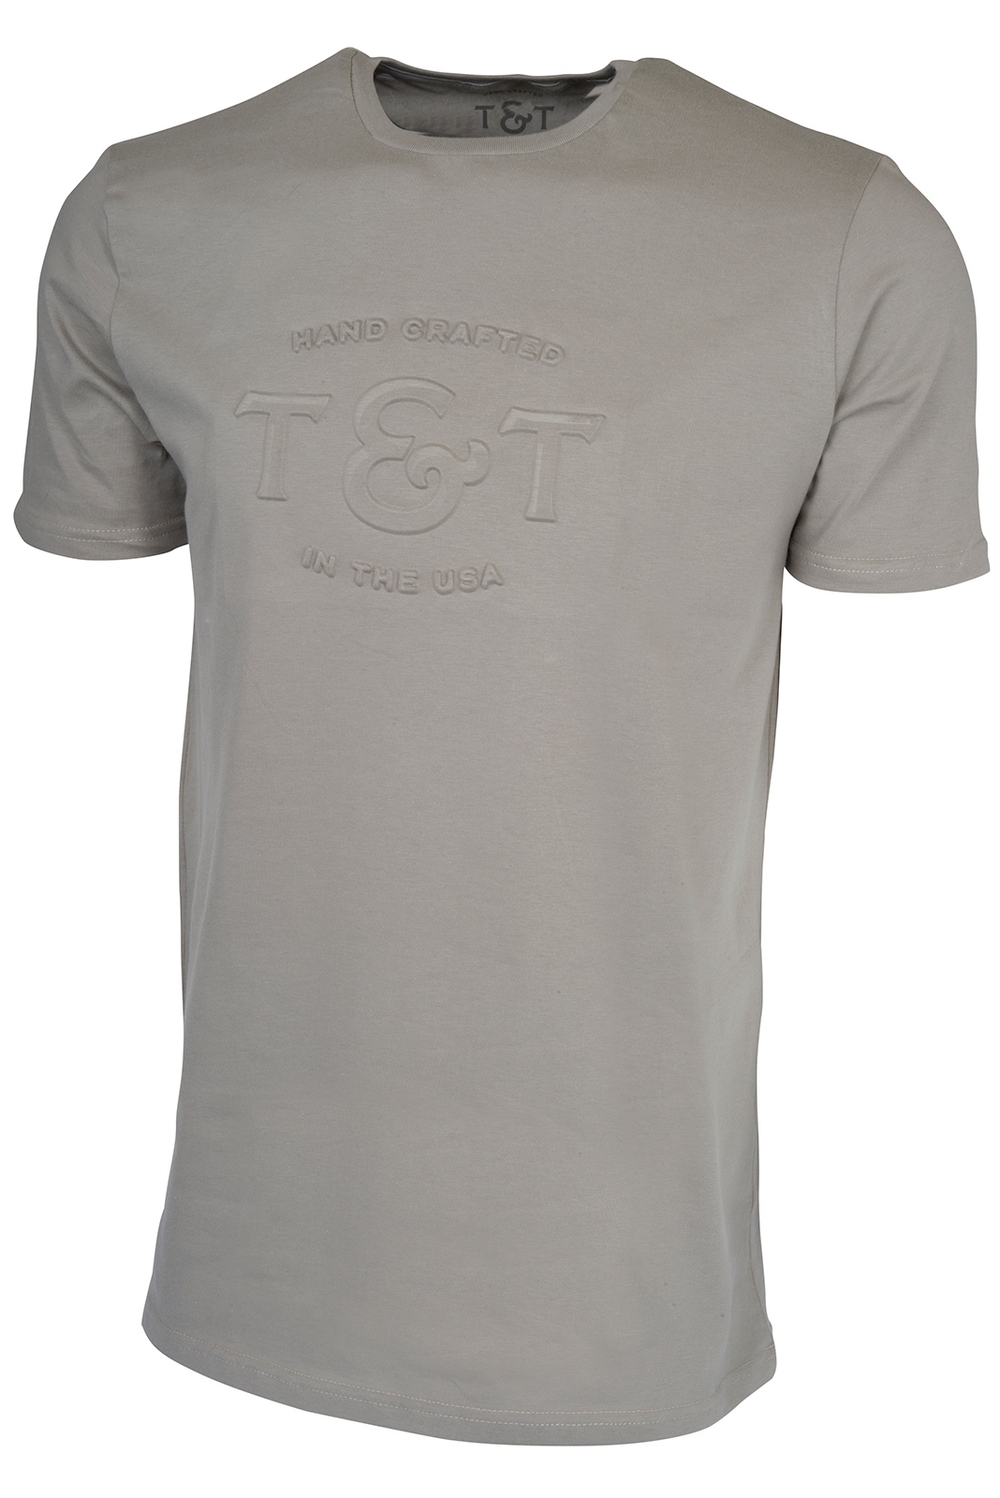 Thomas & Thomas | Amplified Monogram T-Shirt - Khaki